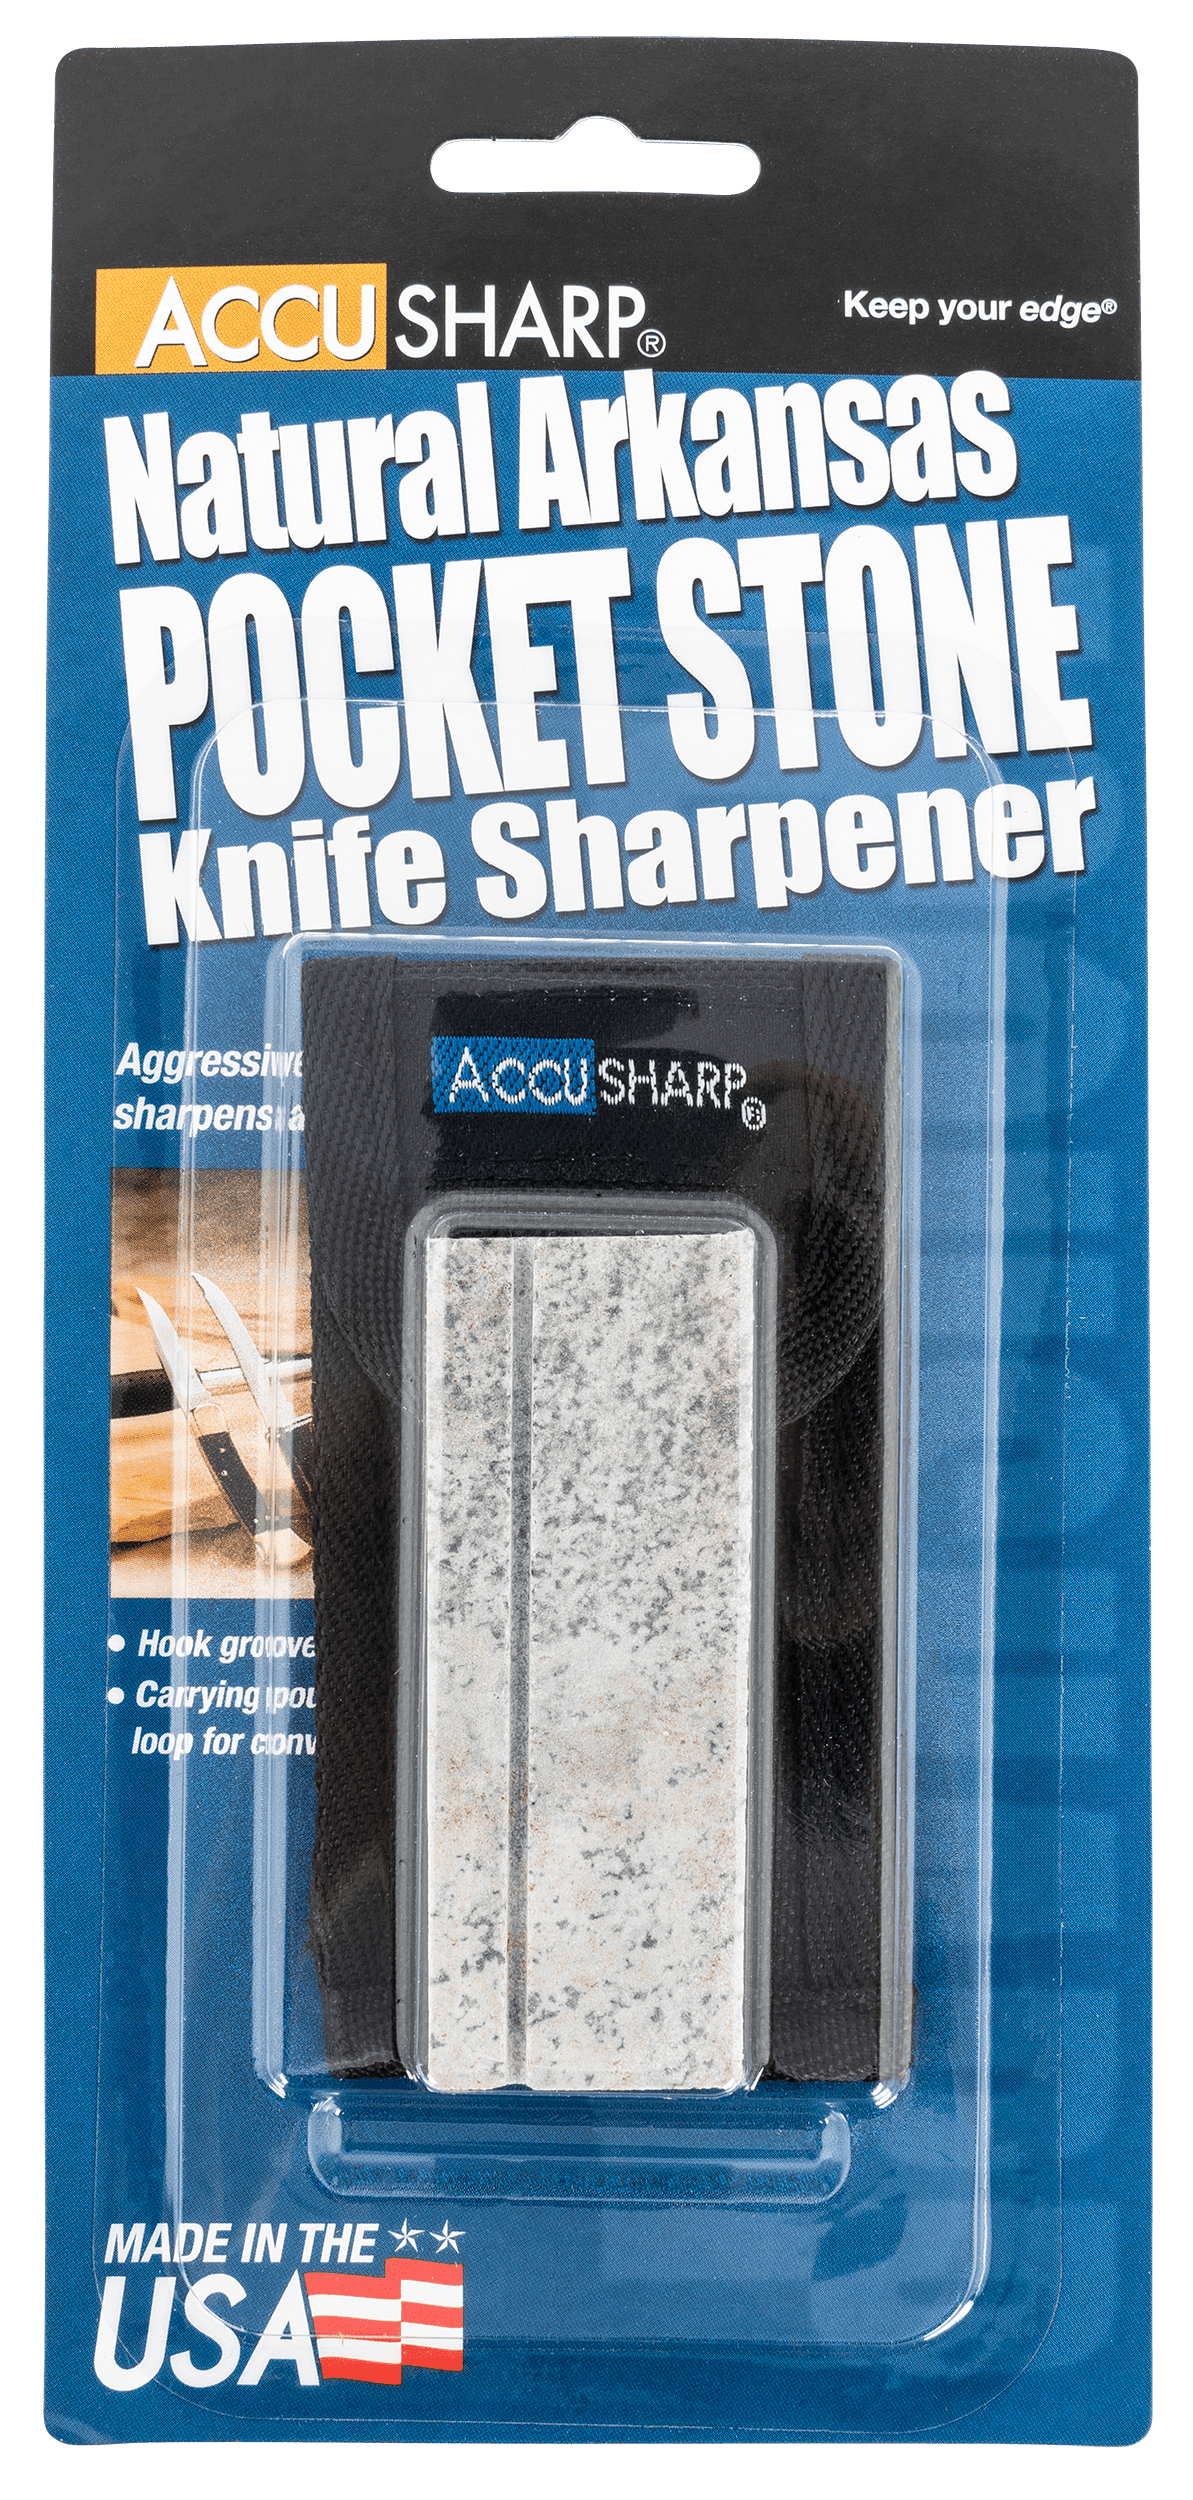 Accusharp Accusharp Pocket Stone, Fpi 024c  Accusharp Natural Ark 3in Stone W/pouch Accessories